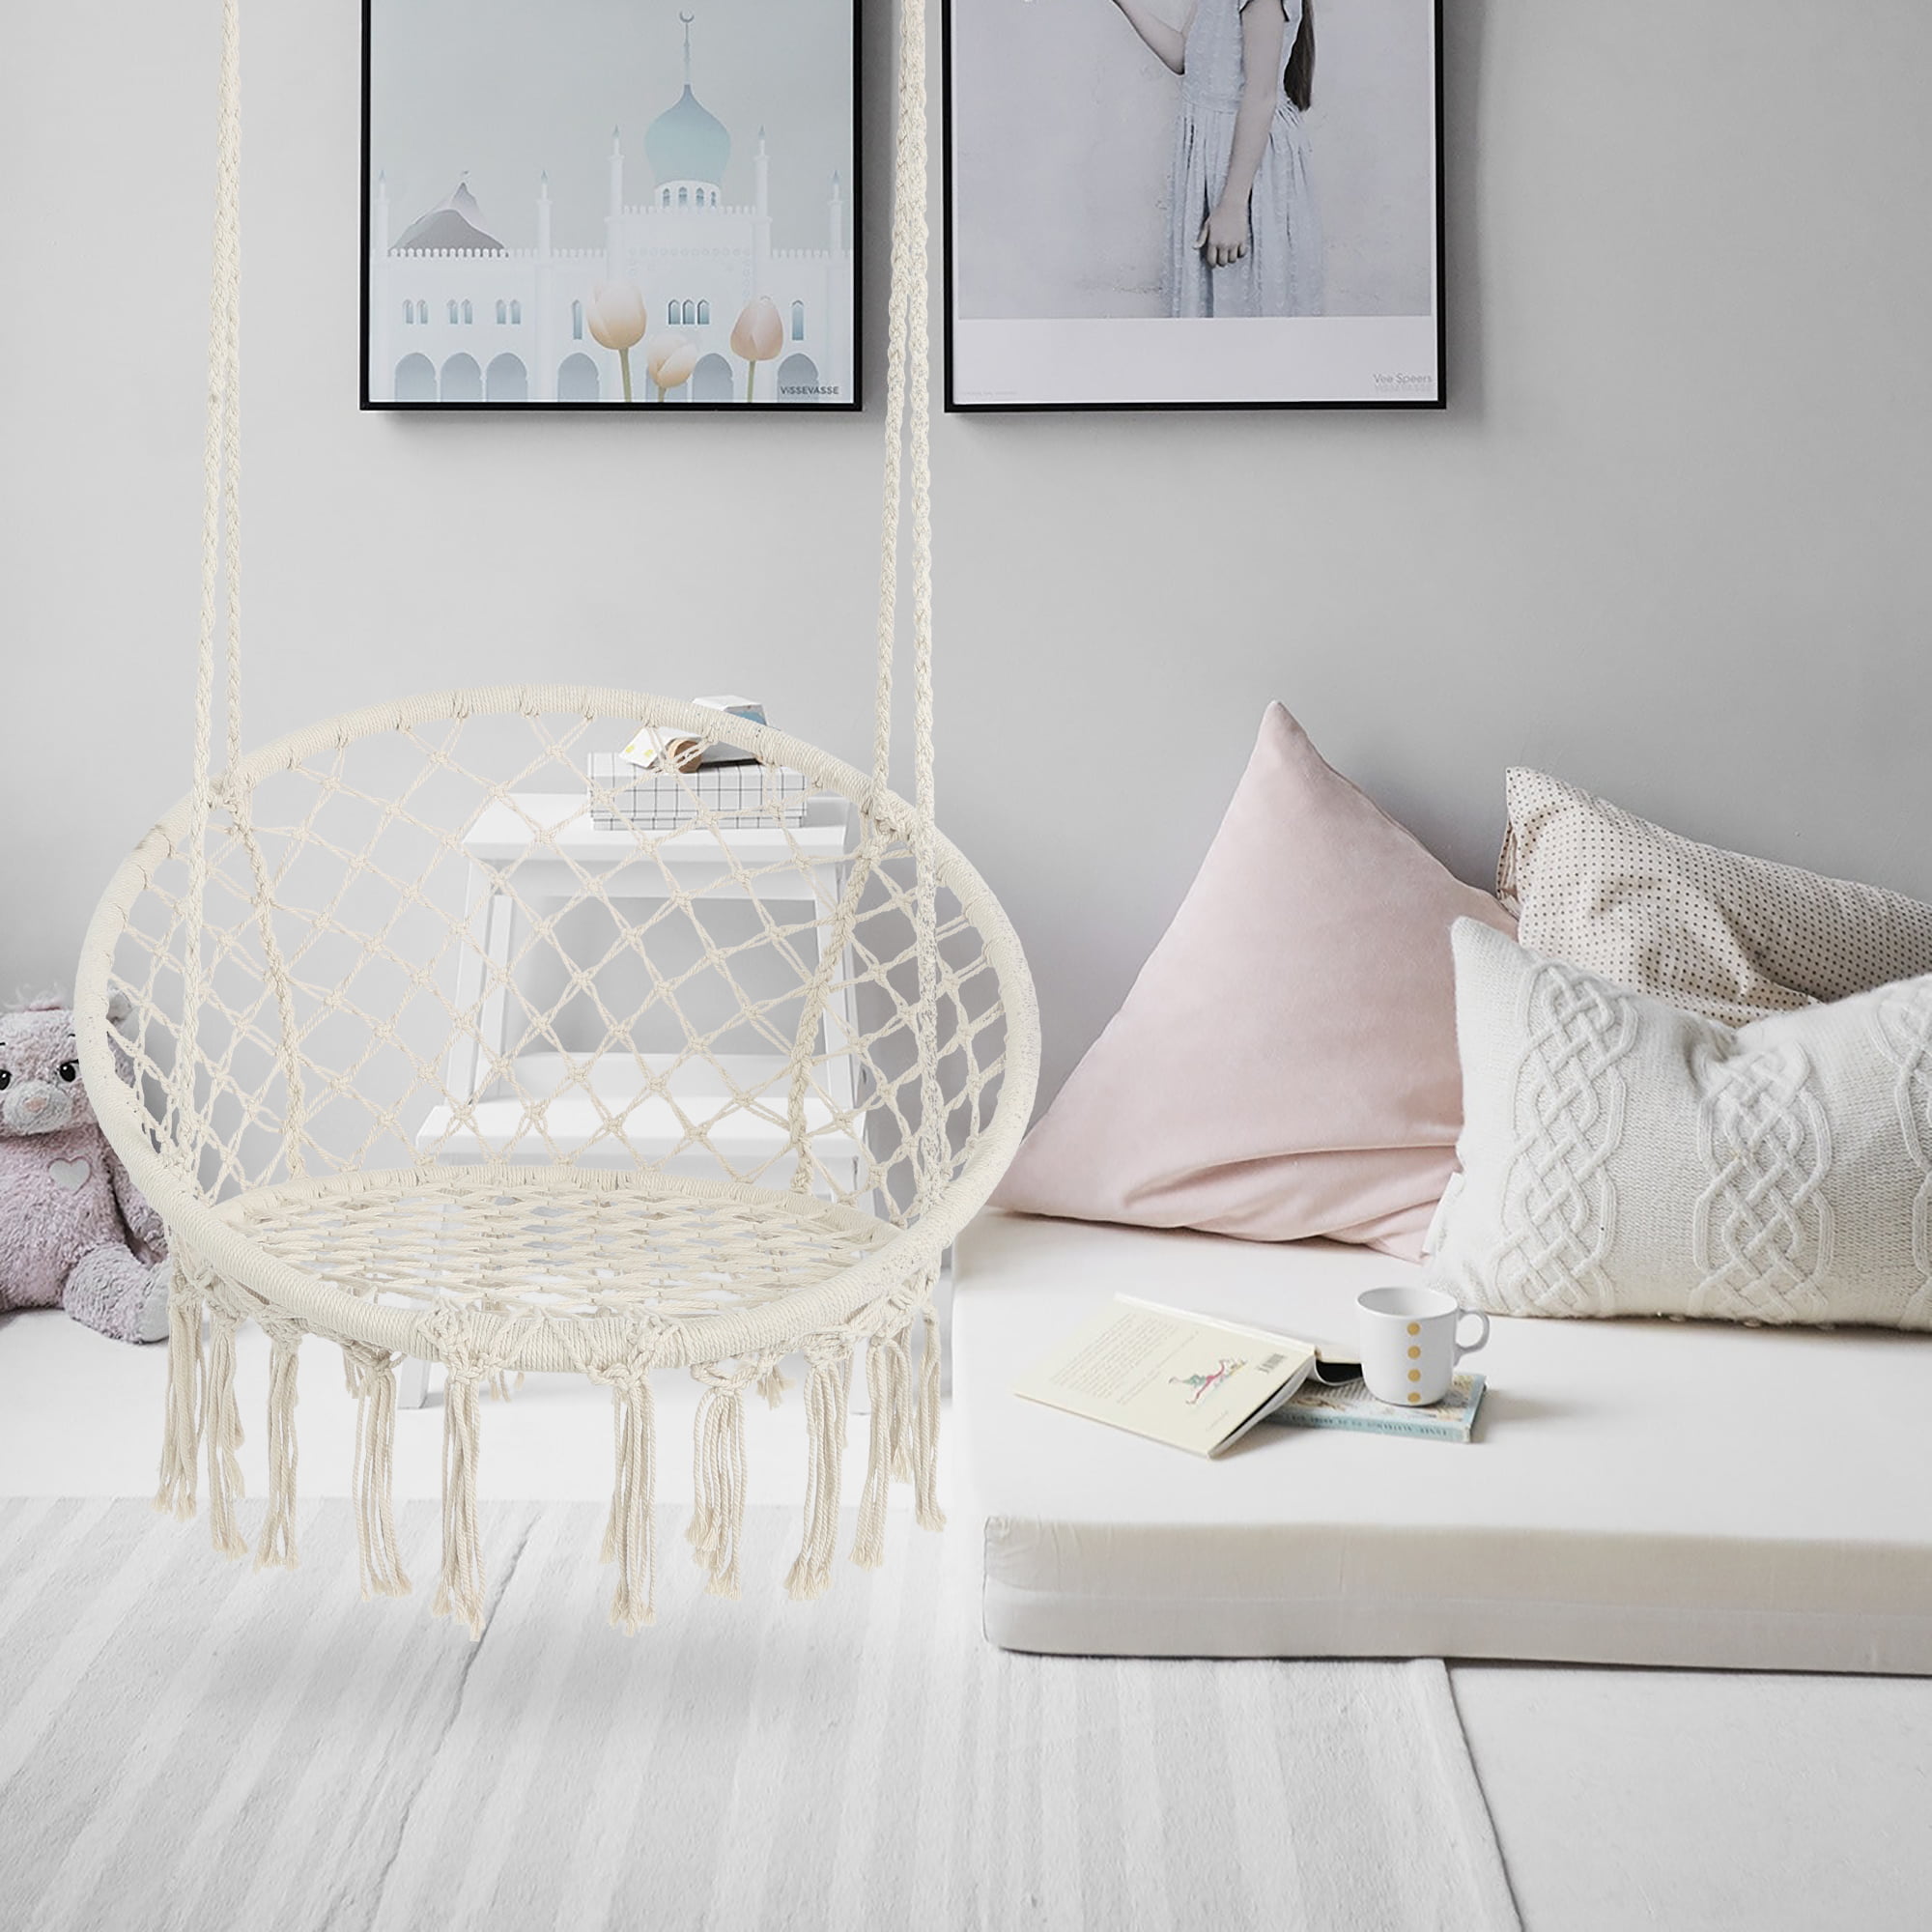 Cotton Tassels Hammock Swing Chair Hanging Bed-Bohemian Style–Outdoor/Indoor